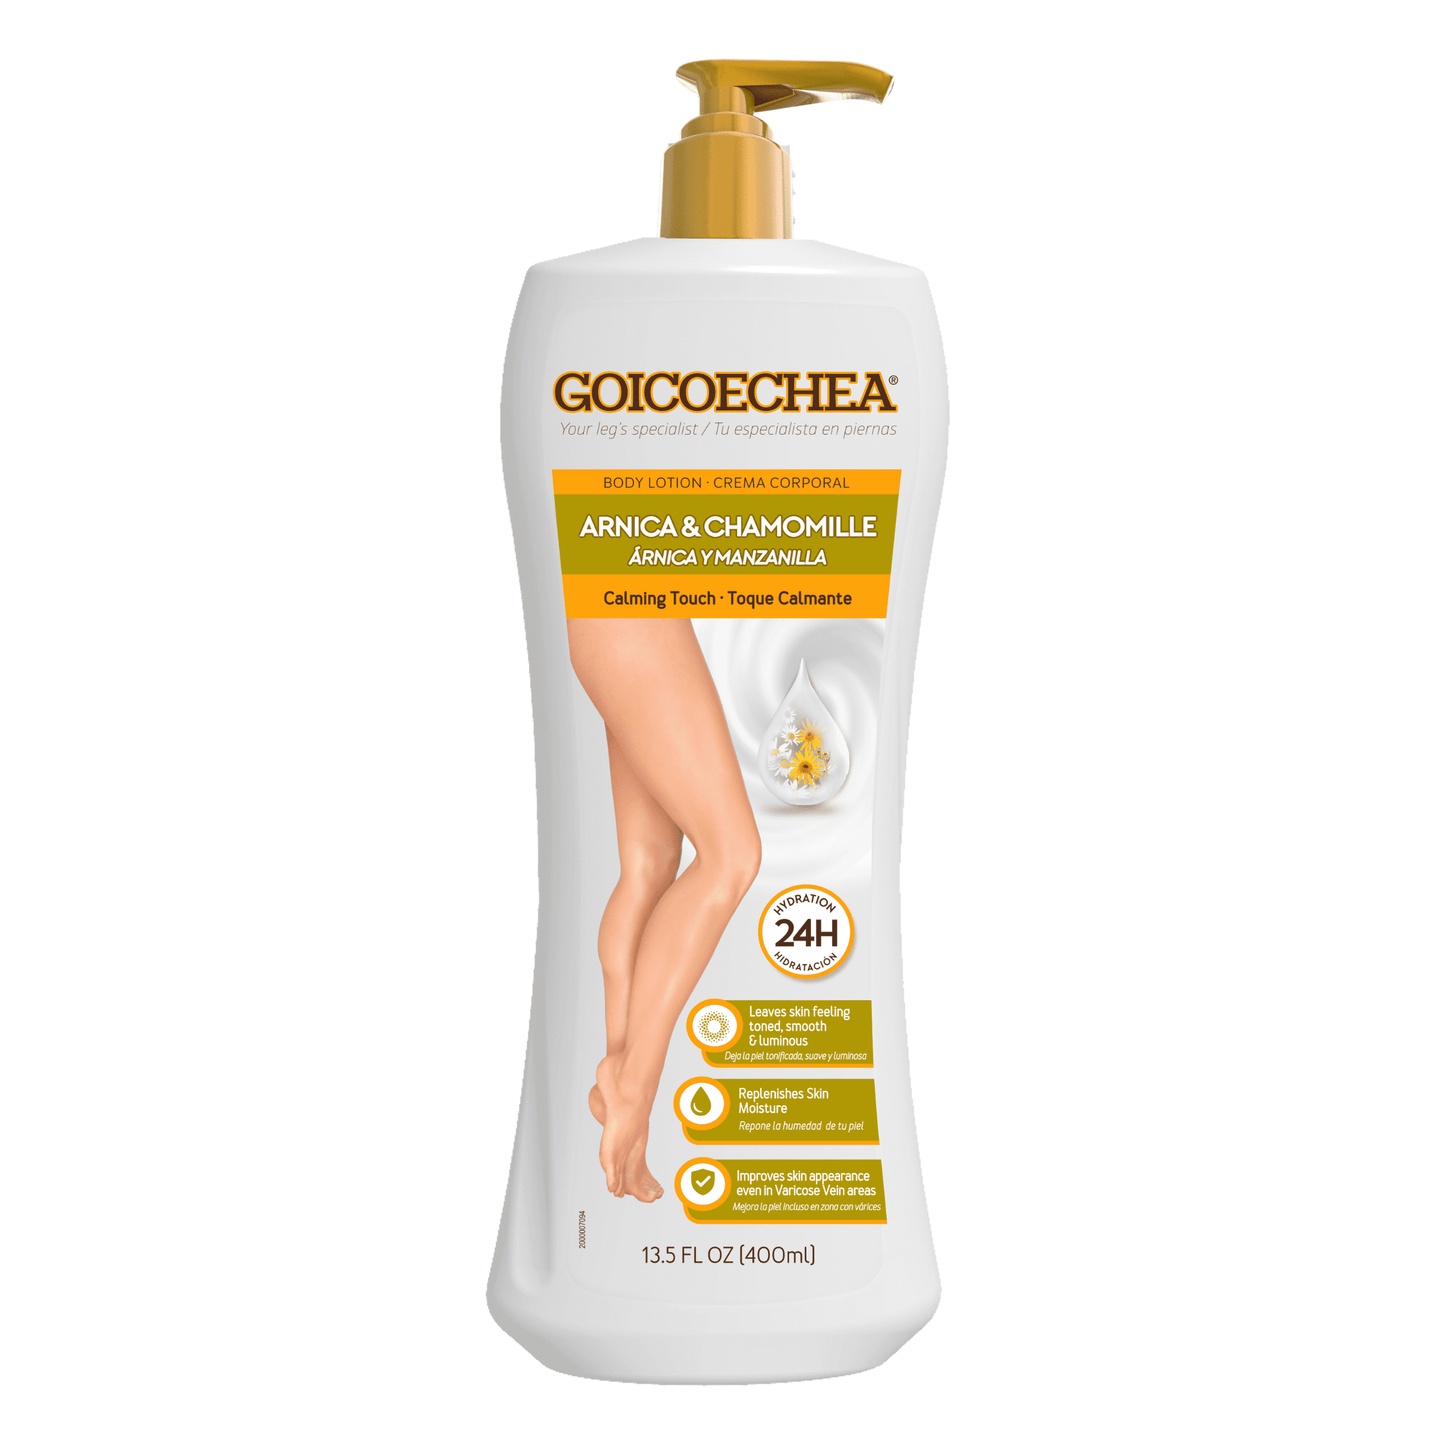 Goicoechea Calming Touch Moisturizer with Arnica, Varicose Vein Cream, Dry Skin 13.5 oz